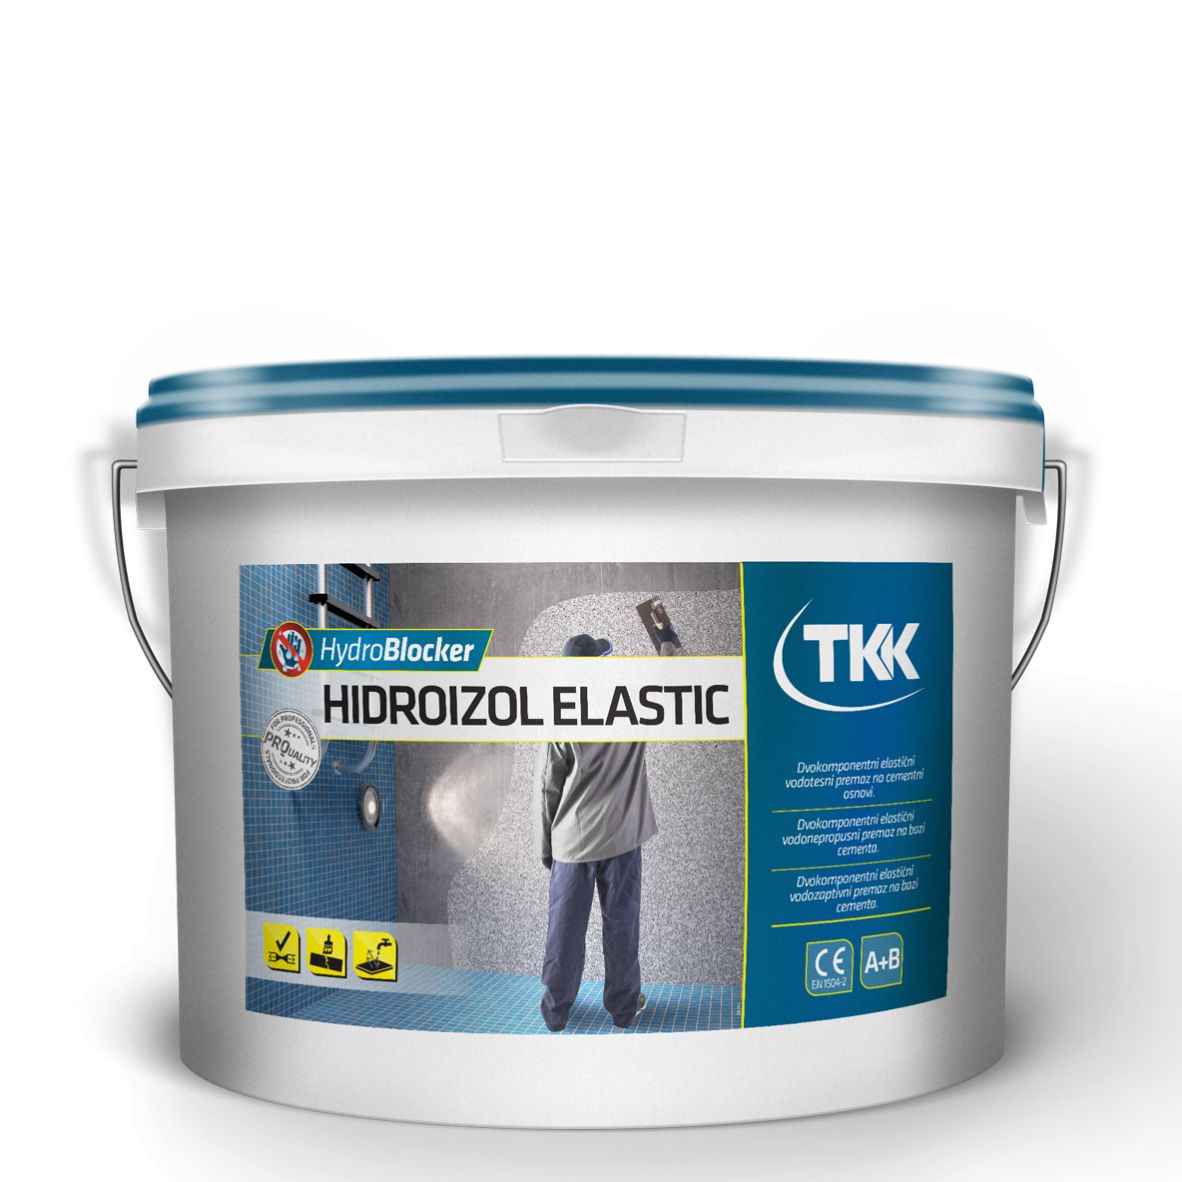 TKK Hydroblocker Hidroizol Elastic 8 1kg